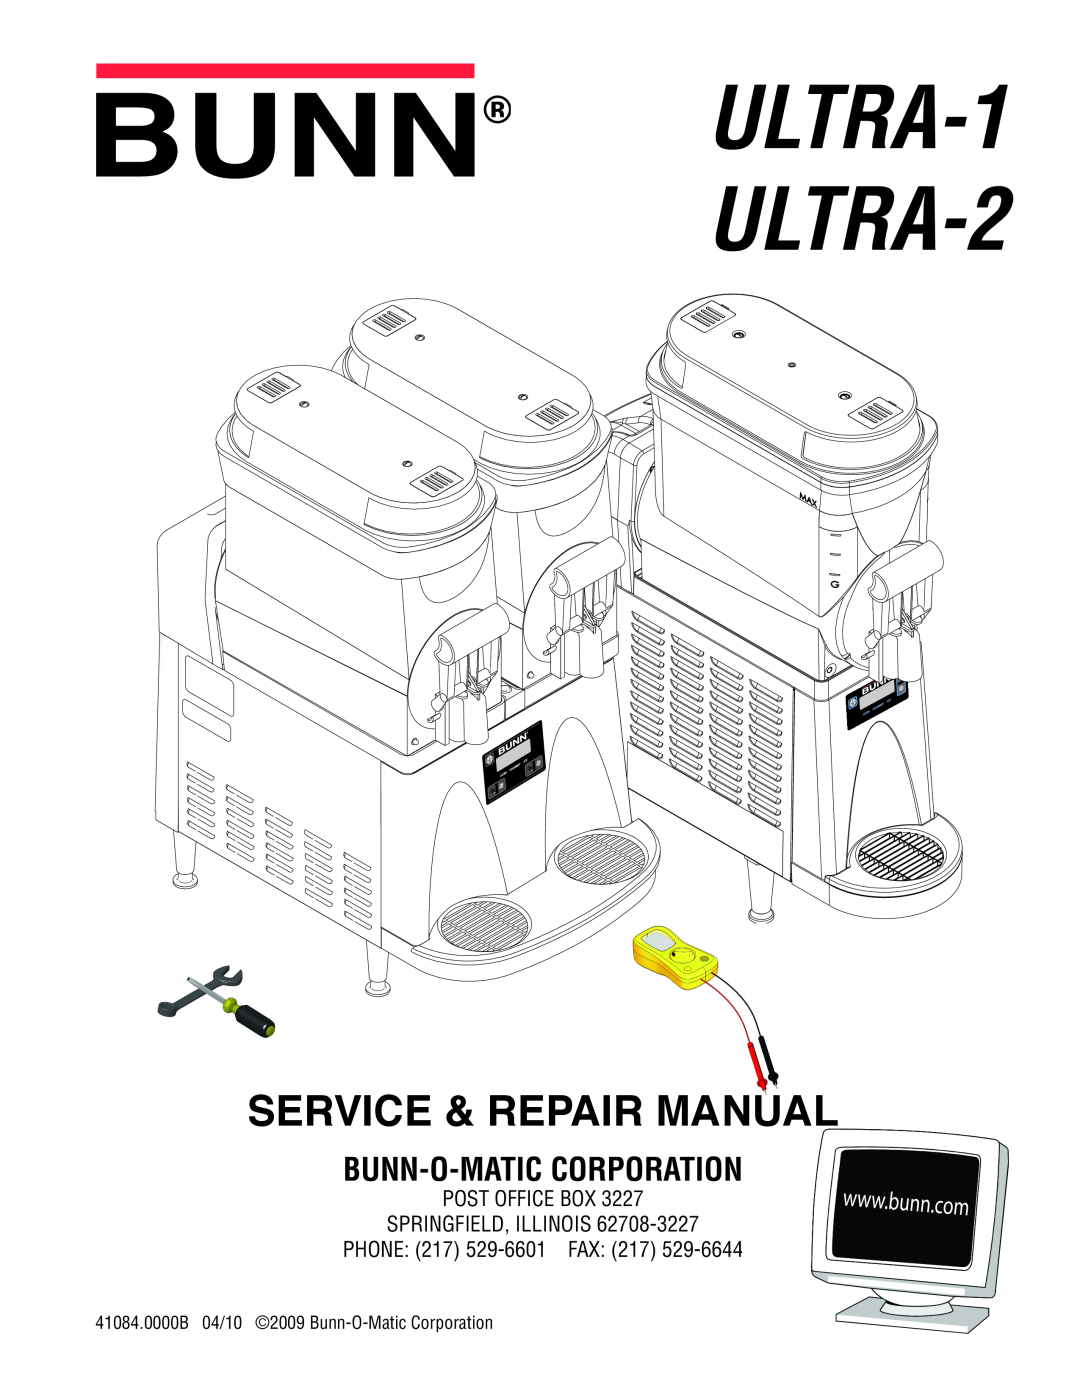 Bunn ULTRA-1 specifications Illustrated Parts Catalog, Bunn-O-Maticcorporation 